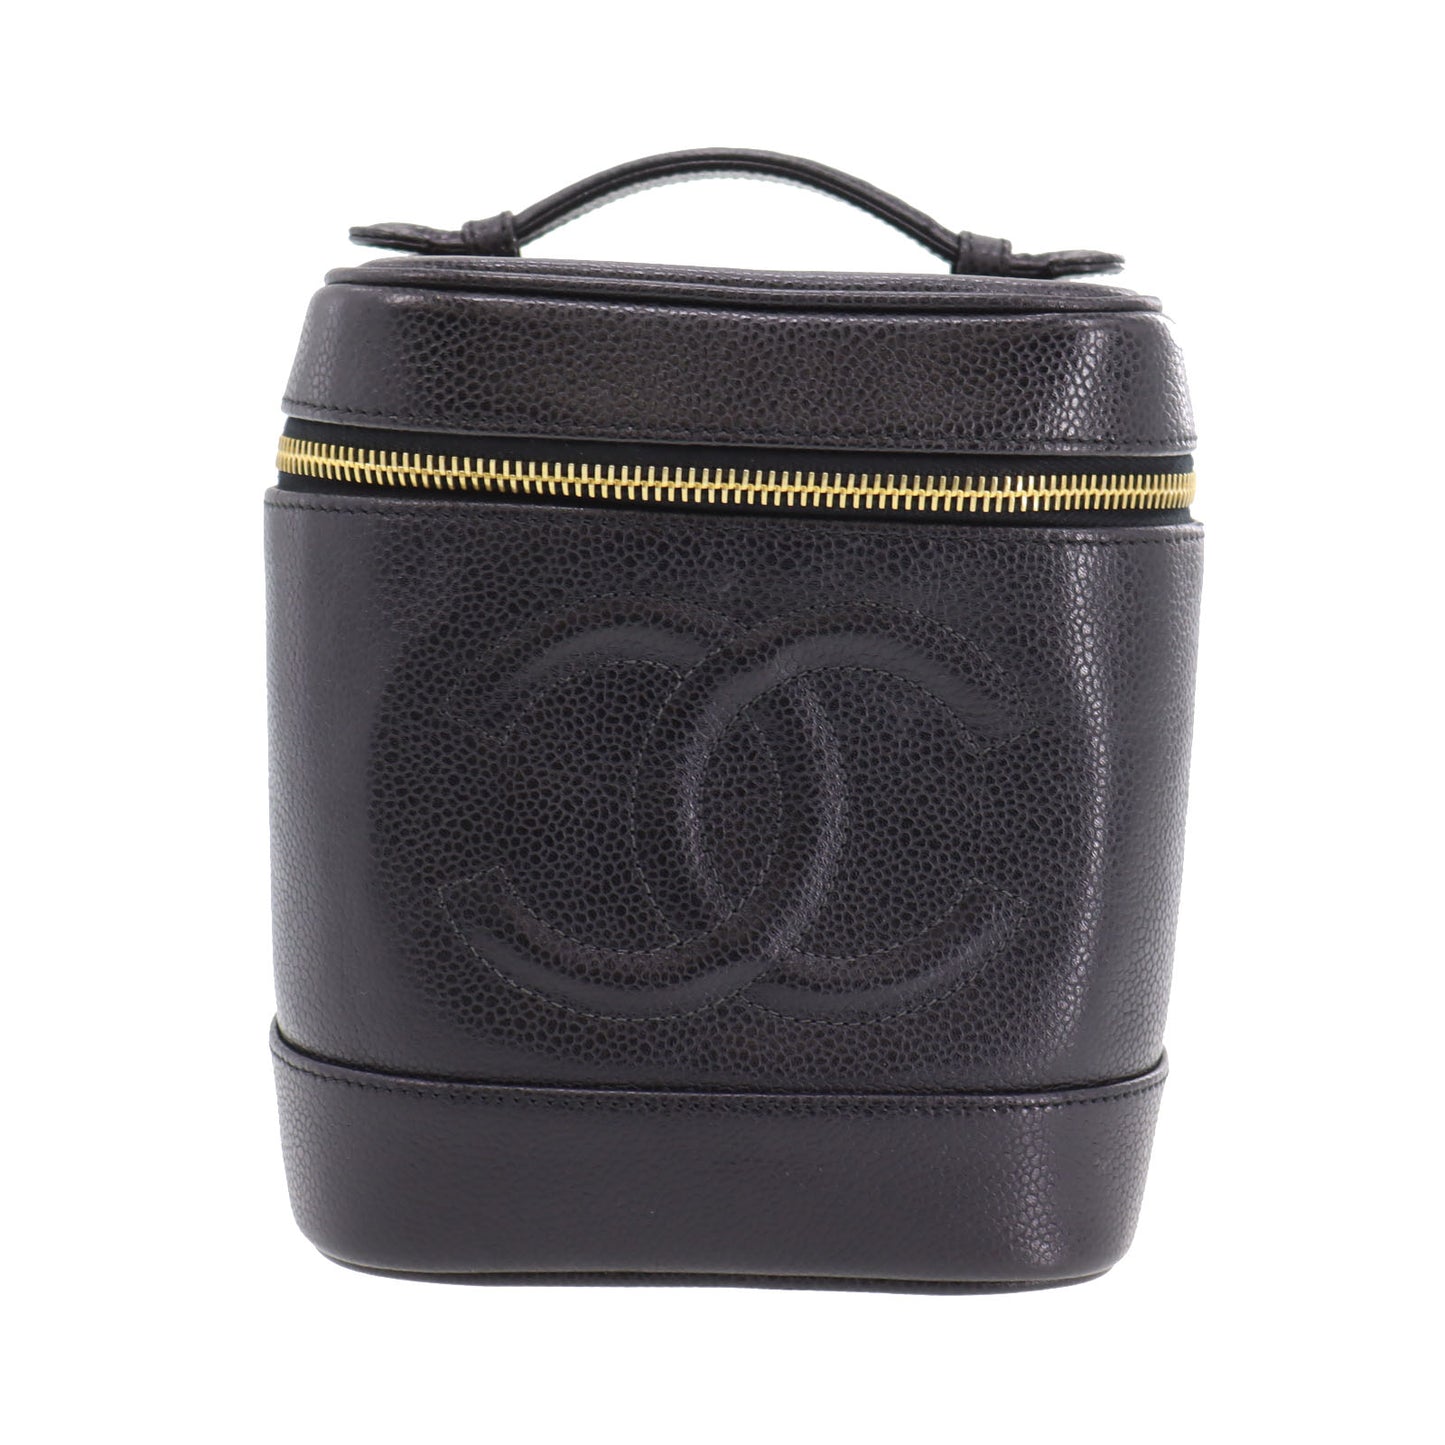 CHANEL CC Handbag Vanity Black Caviar Skin Leather #CP939